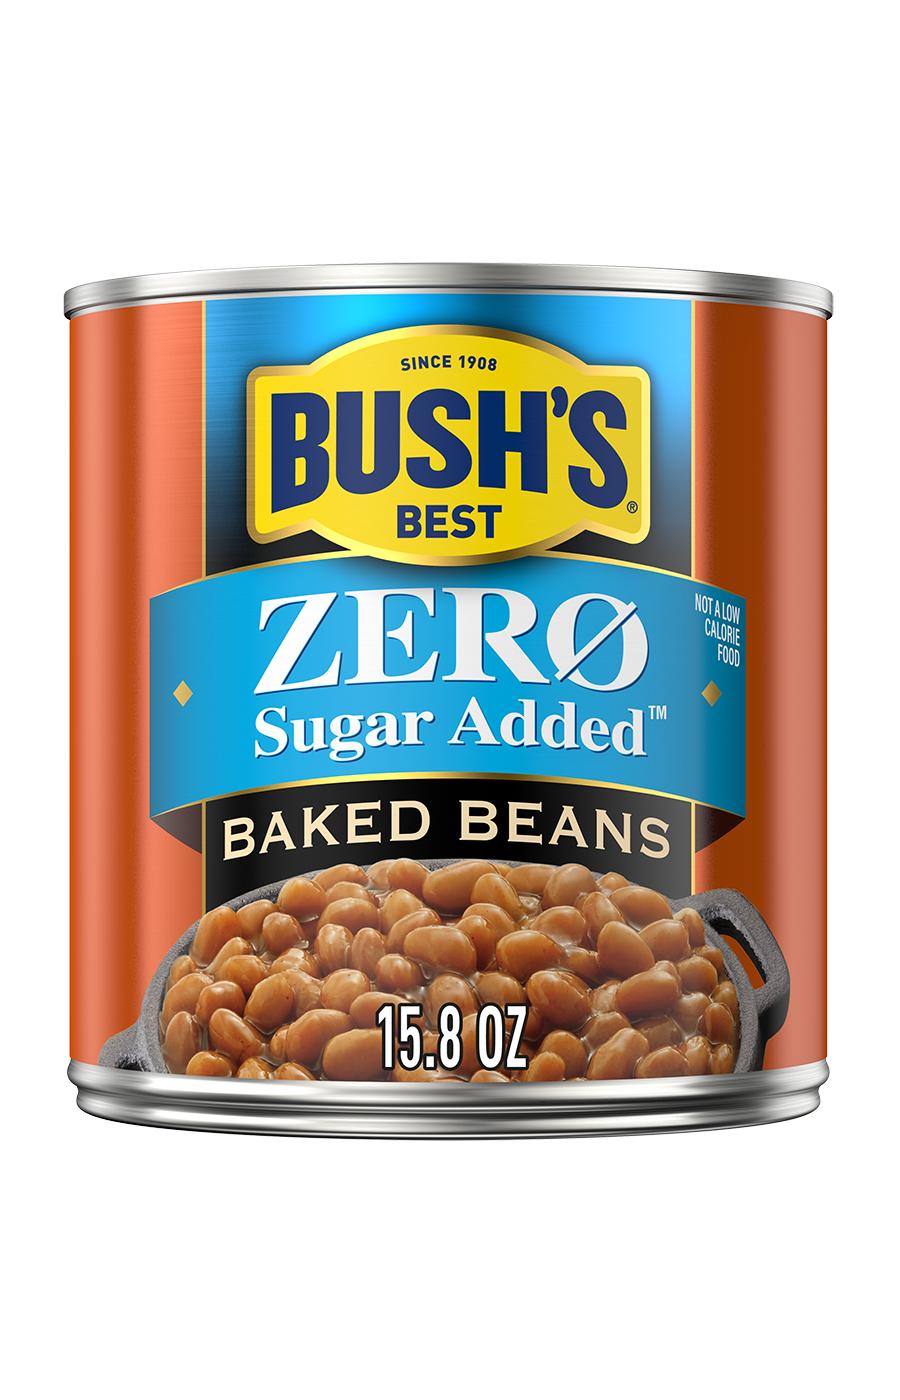 Bush's Best Zero Sugar Added Baked Beans; image 1 of 2